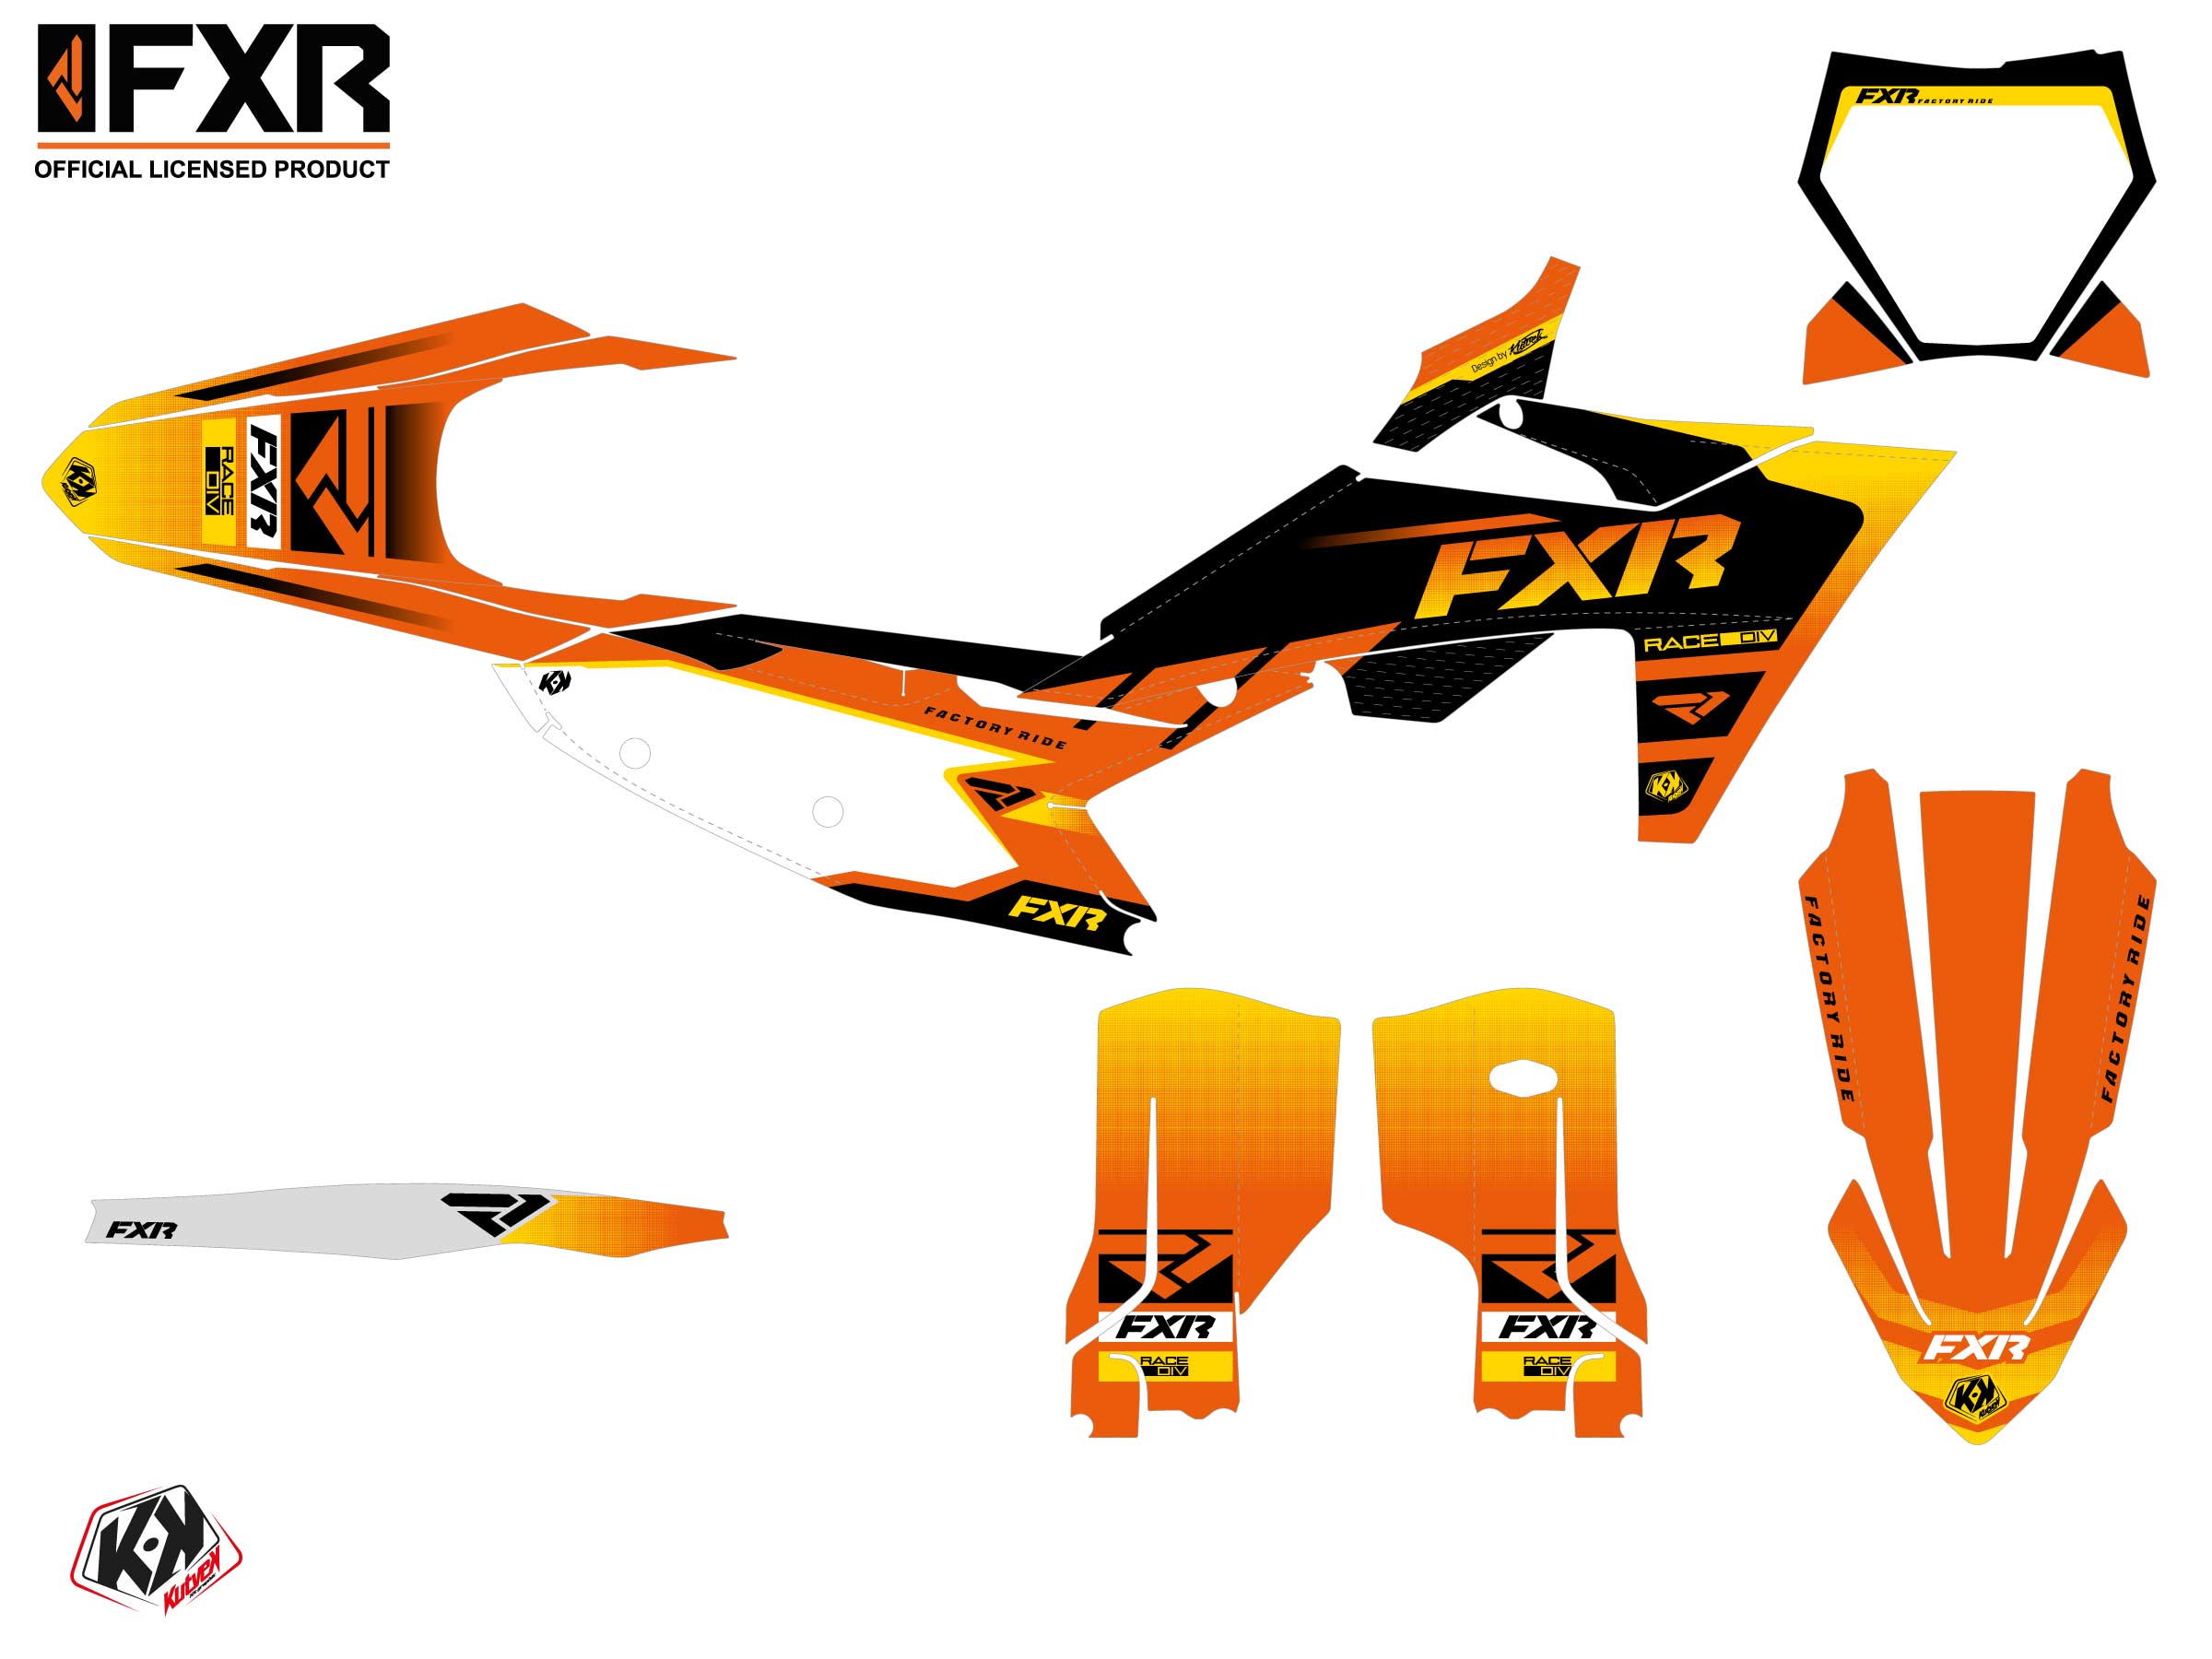 Kit Déco Motocross Fxr Revo Ktm Sx 350 F Orange